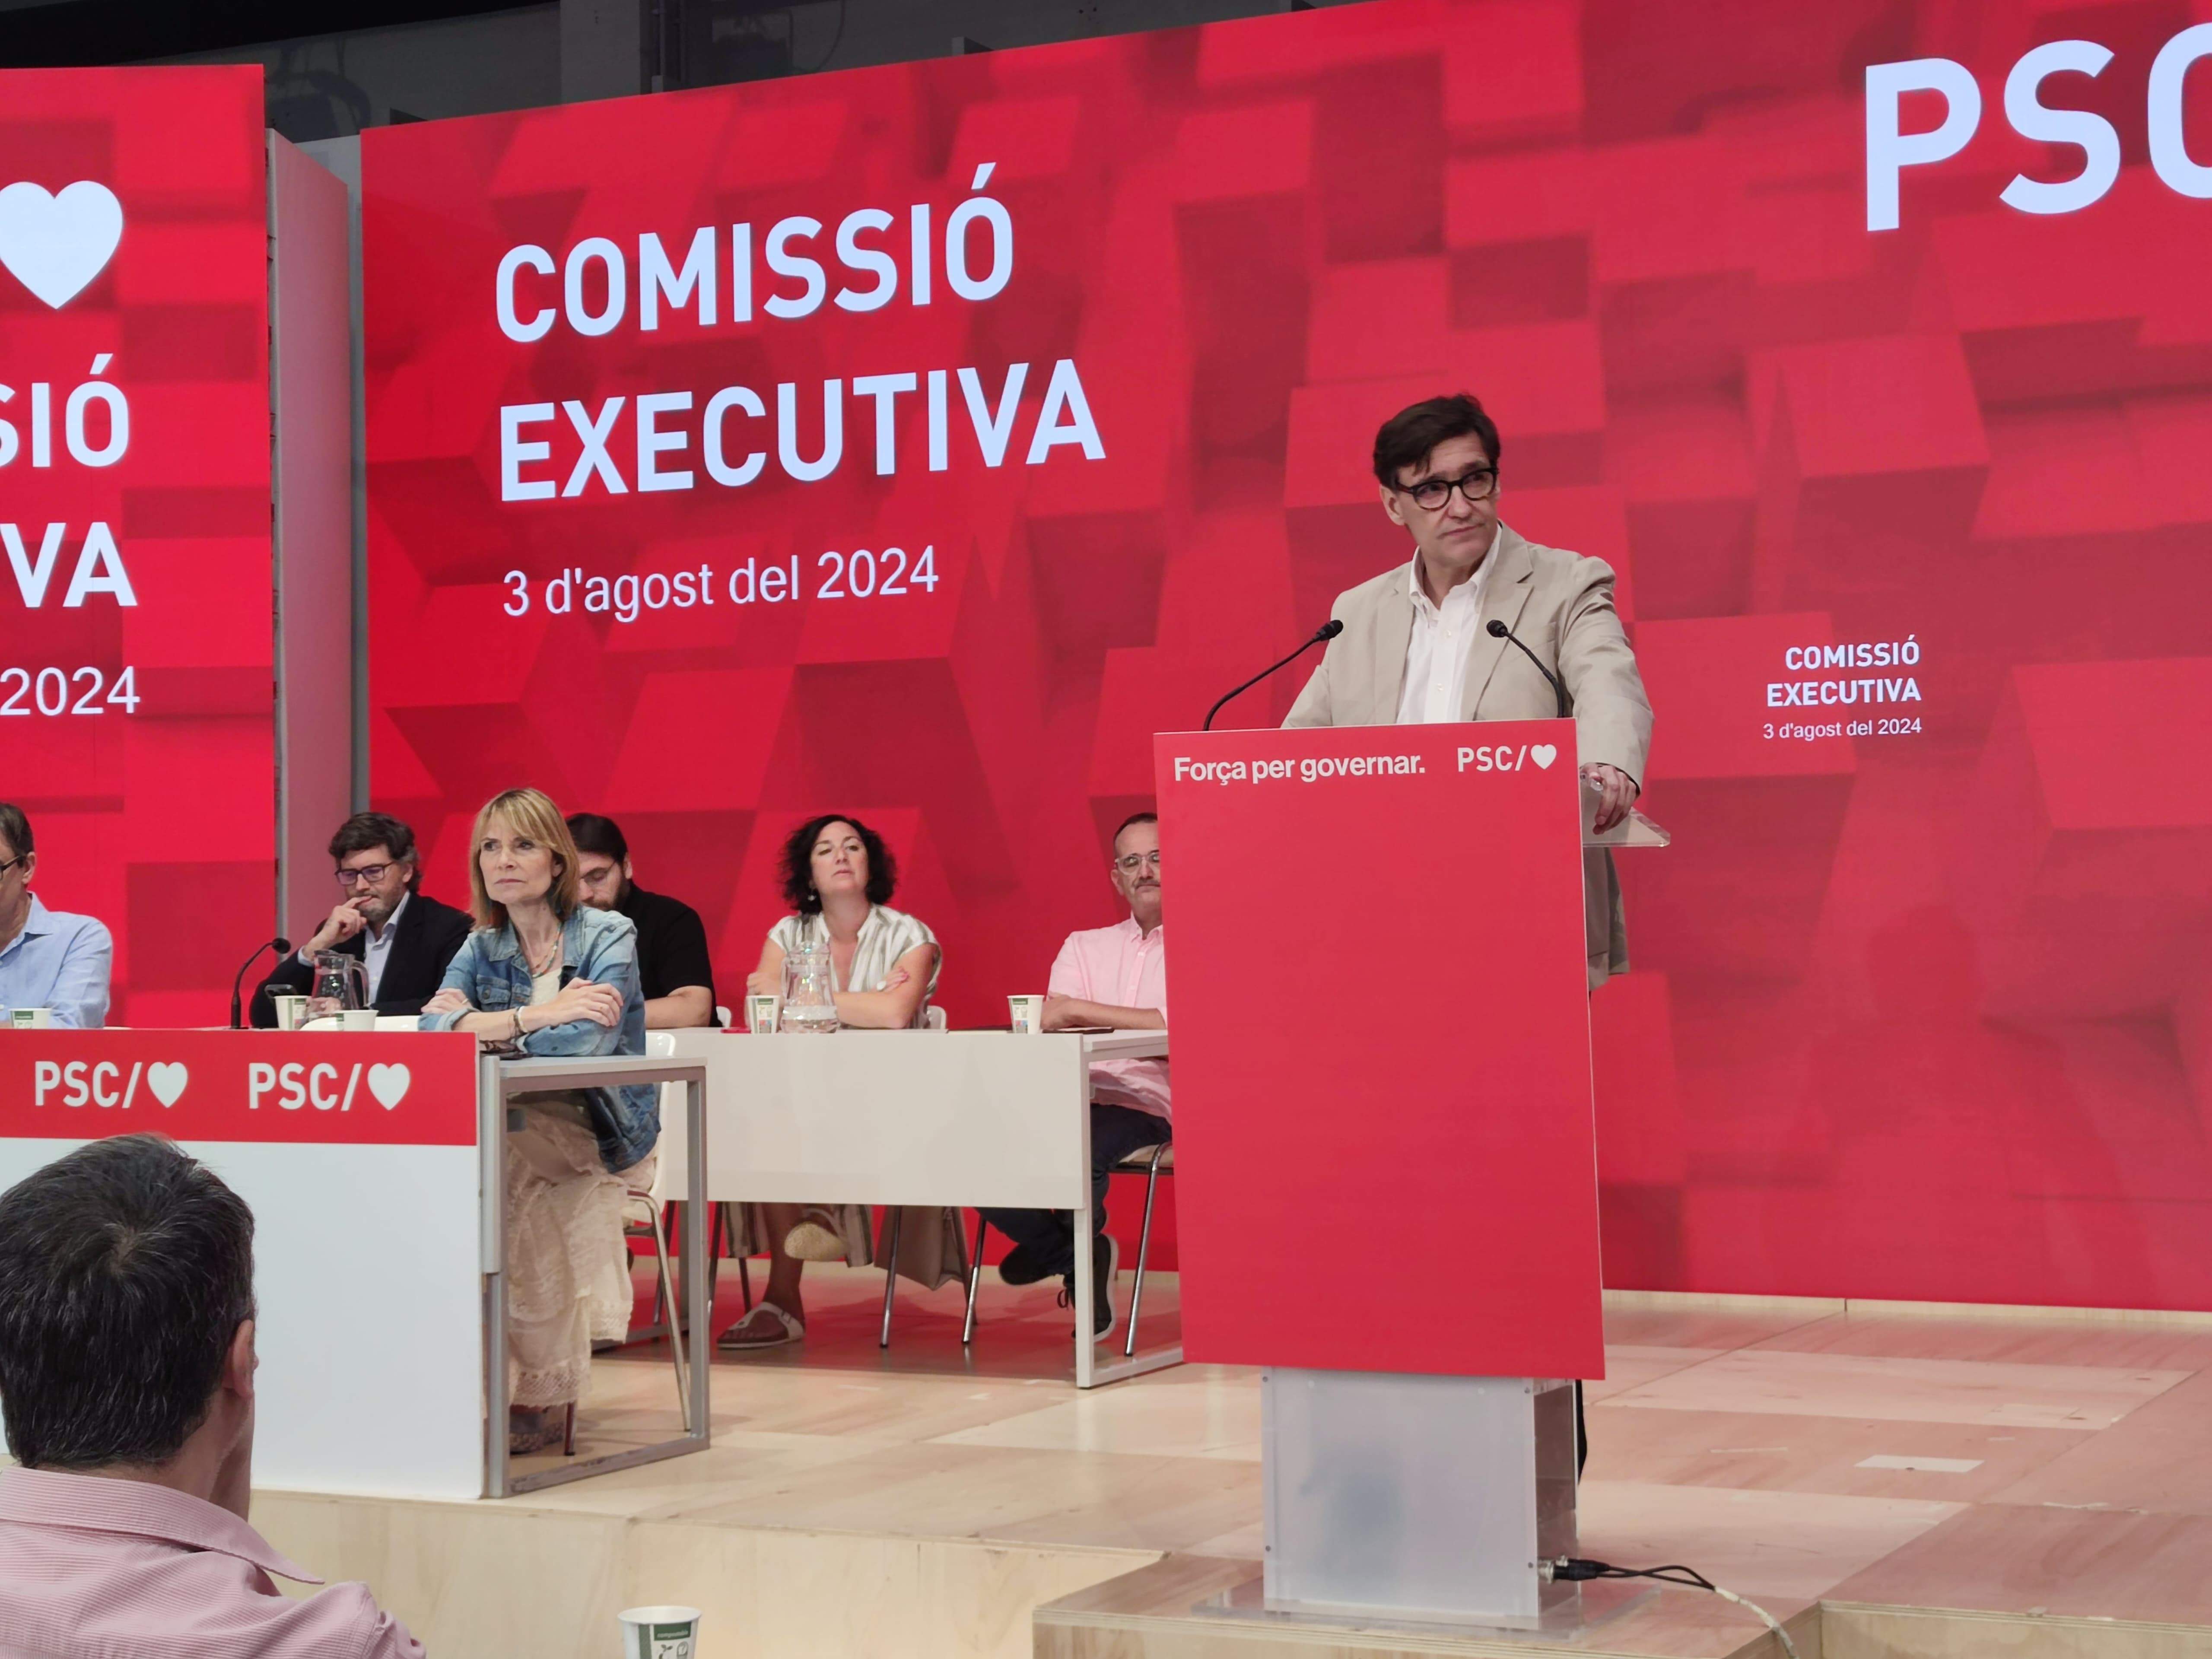 El dard de Salvador Illa a Puigdemont: "La política és un exercici de realisme, no de fantasia"